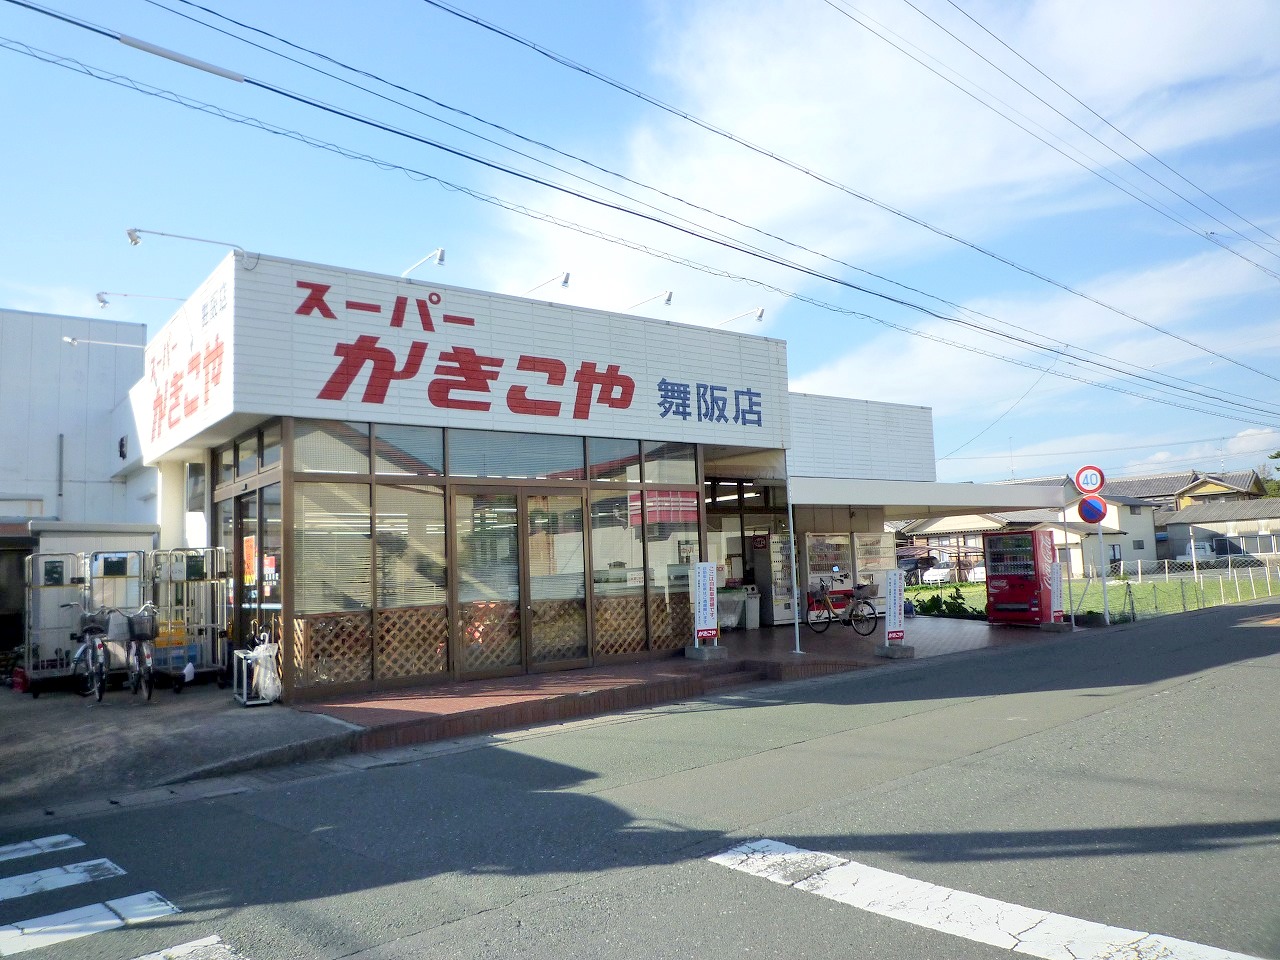 Supermarket. Kakiko and Maisaka store up to (super) 592m